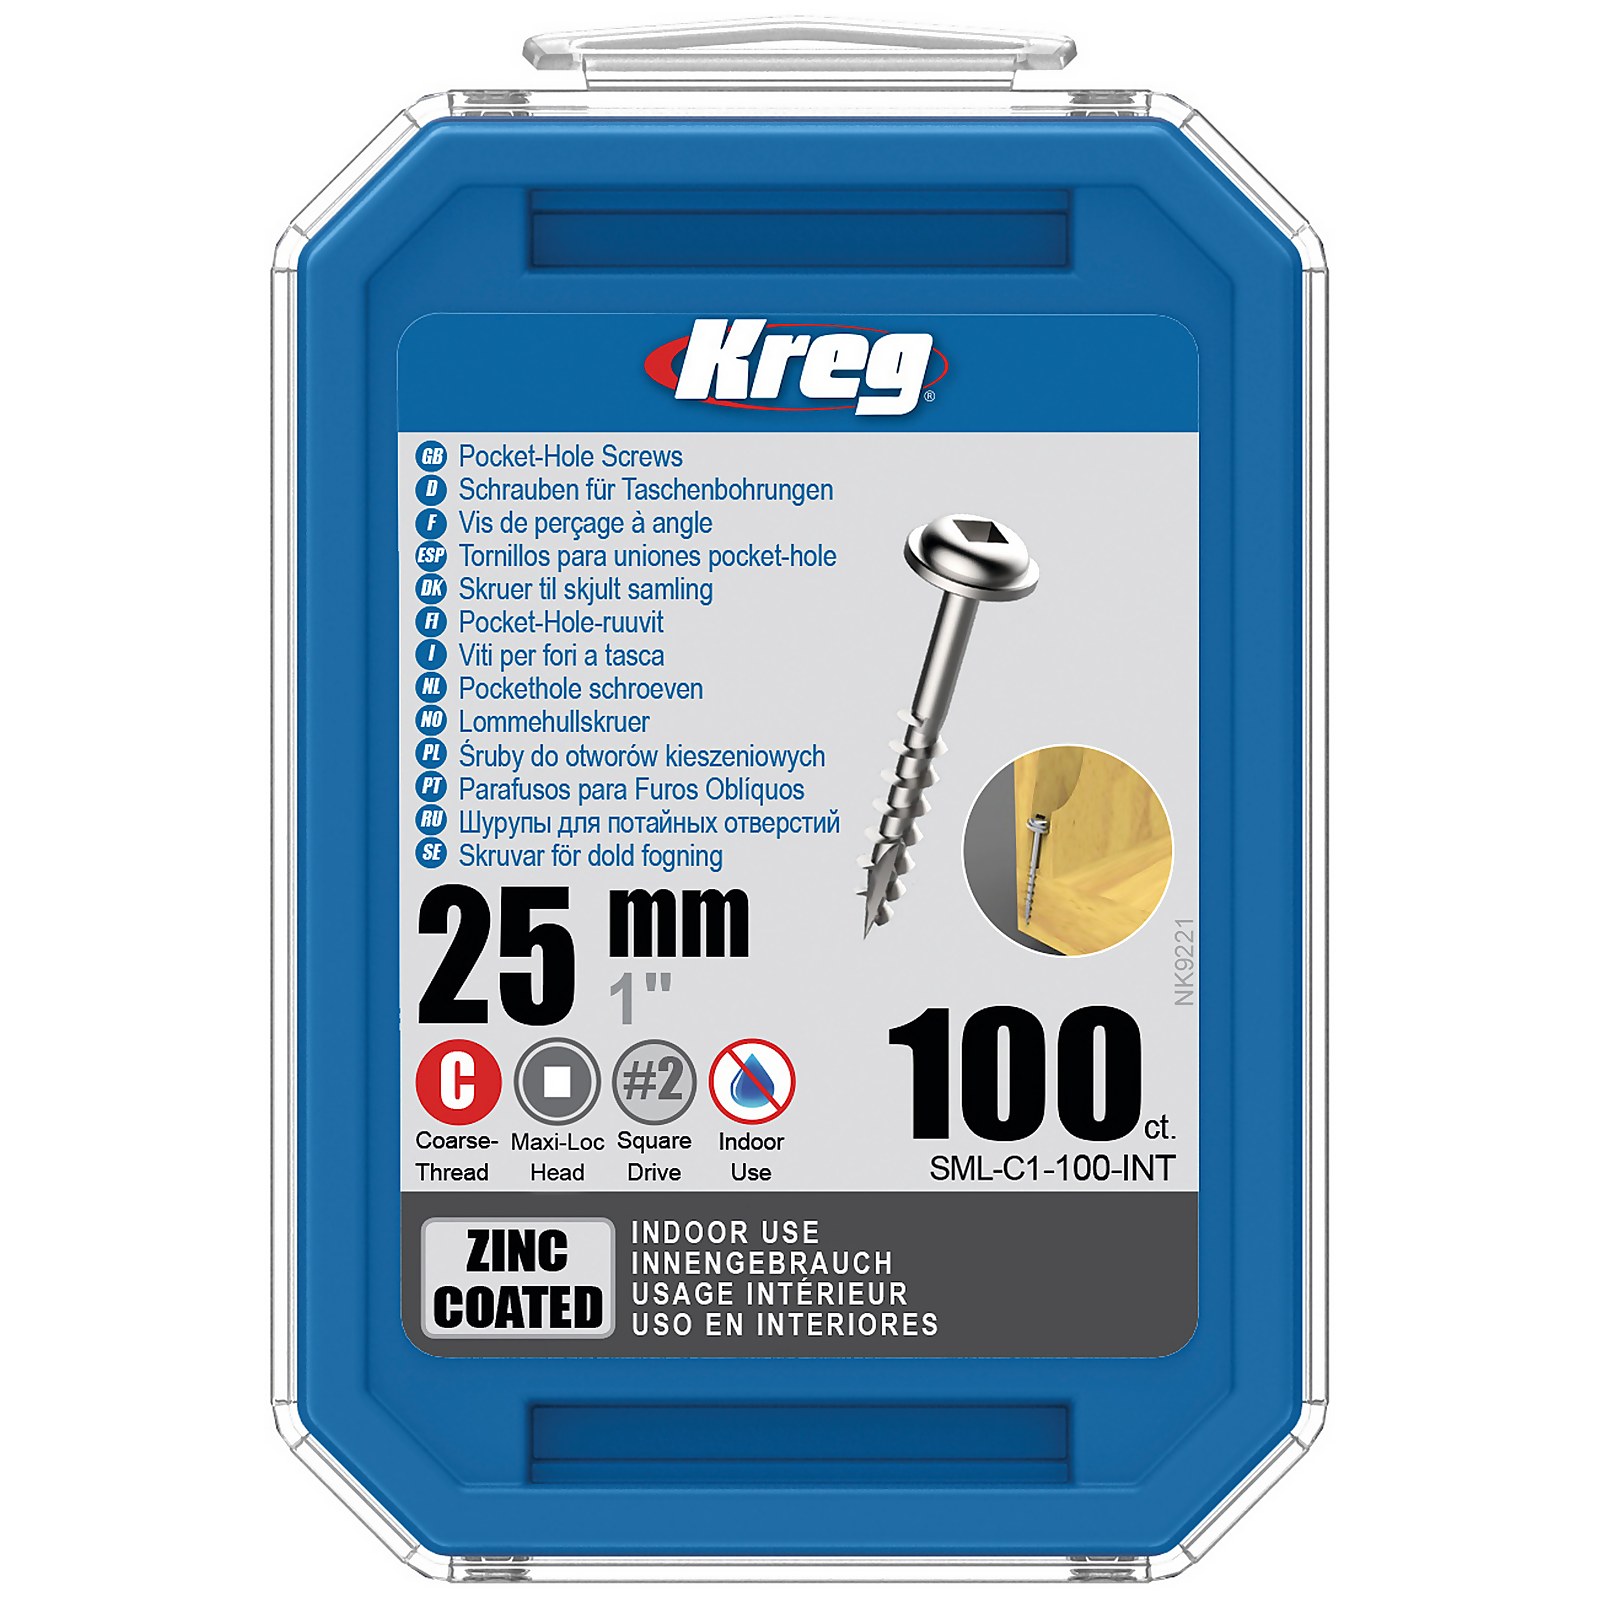 Photo of Kreg Sml-c1-100-eur Zinc Pocket-hole Screws - 25mm / 1.00 - #8 Coarse-thread- Maxi-loc - 100 Pack